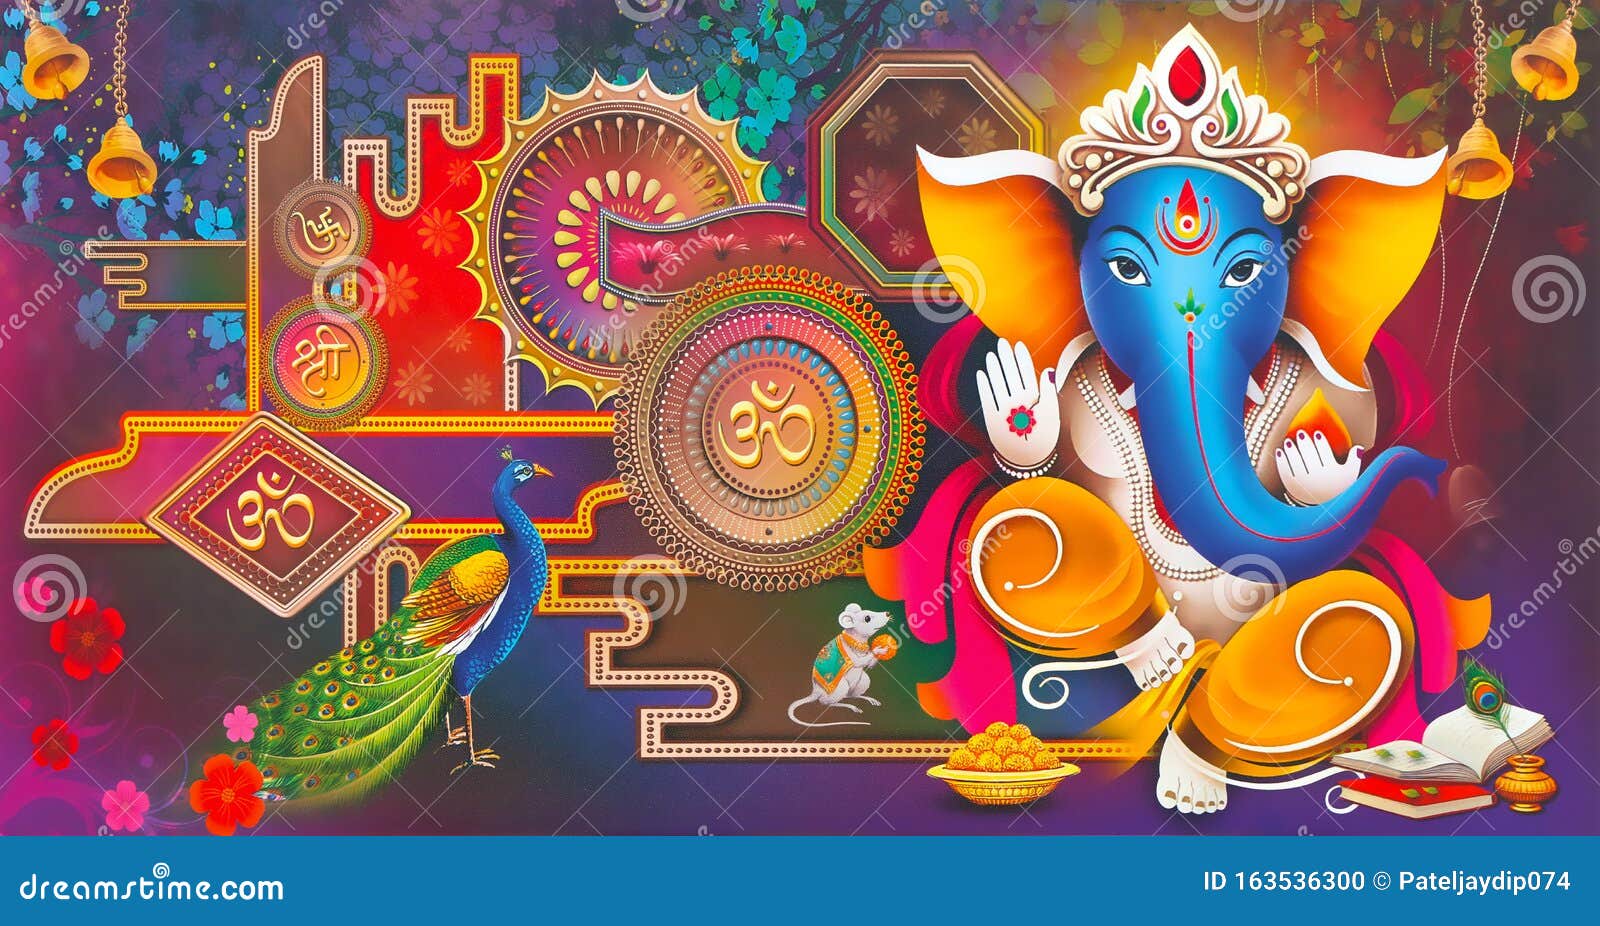 500 Ganesh Ji Wallpapers  Background Beautiful Best Available For  Download Ganesh Ji Images Free On Zicxacomphotos  Zicxa Photos